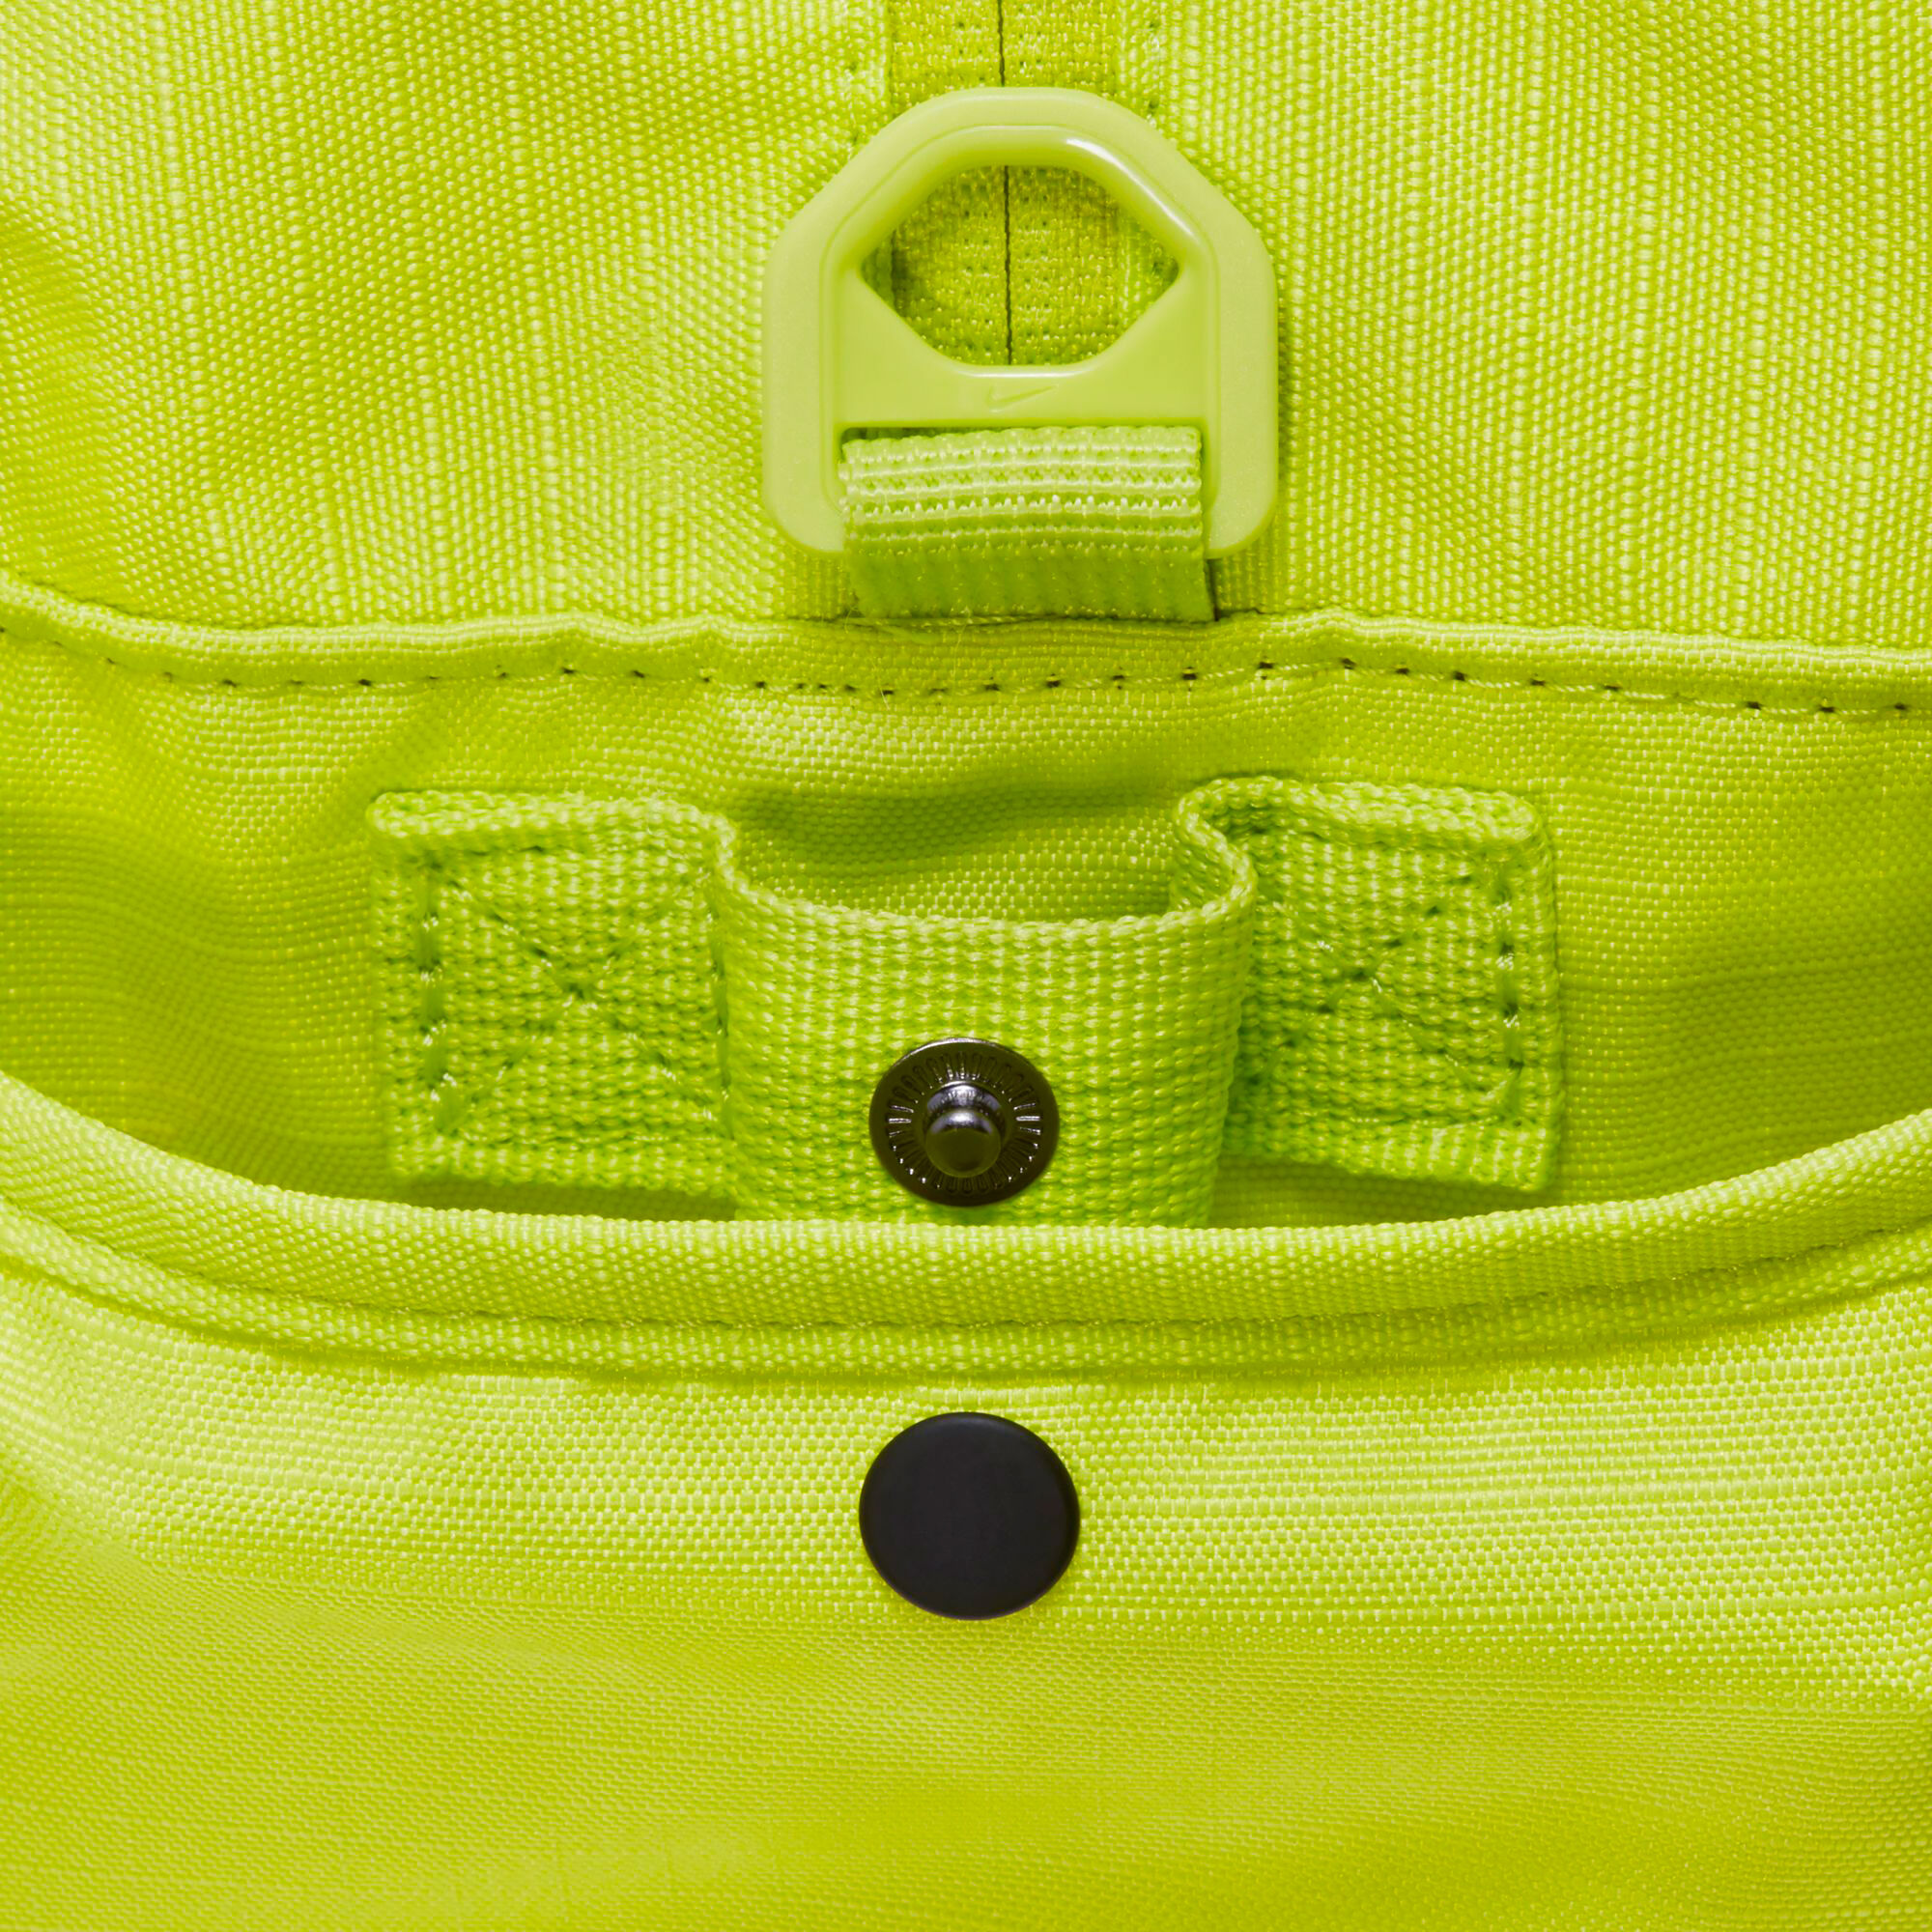 Buy Nike Gym Duffle Sports Bag Neon Green, Black online | Tennis Point COM